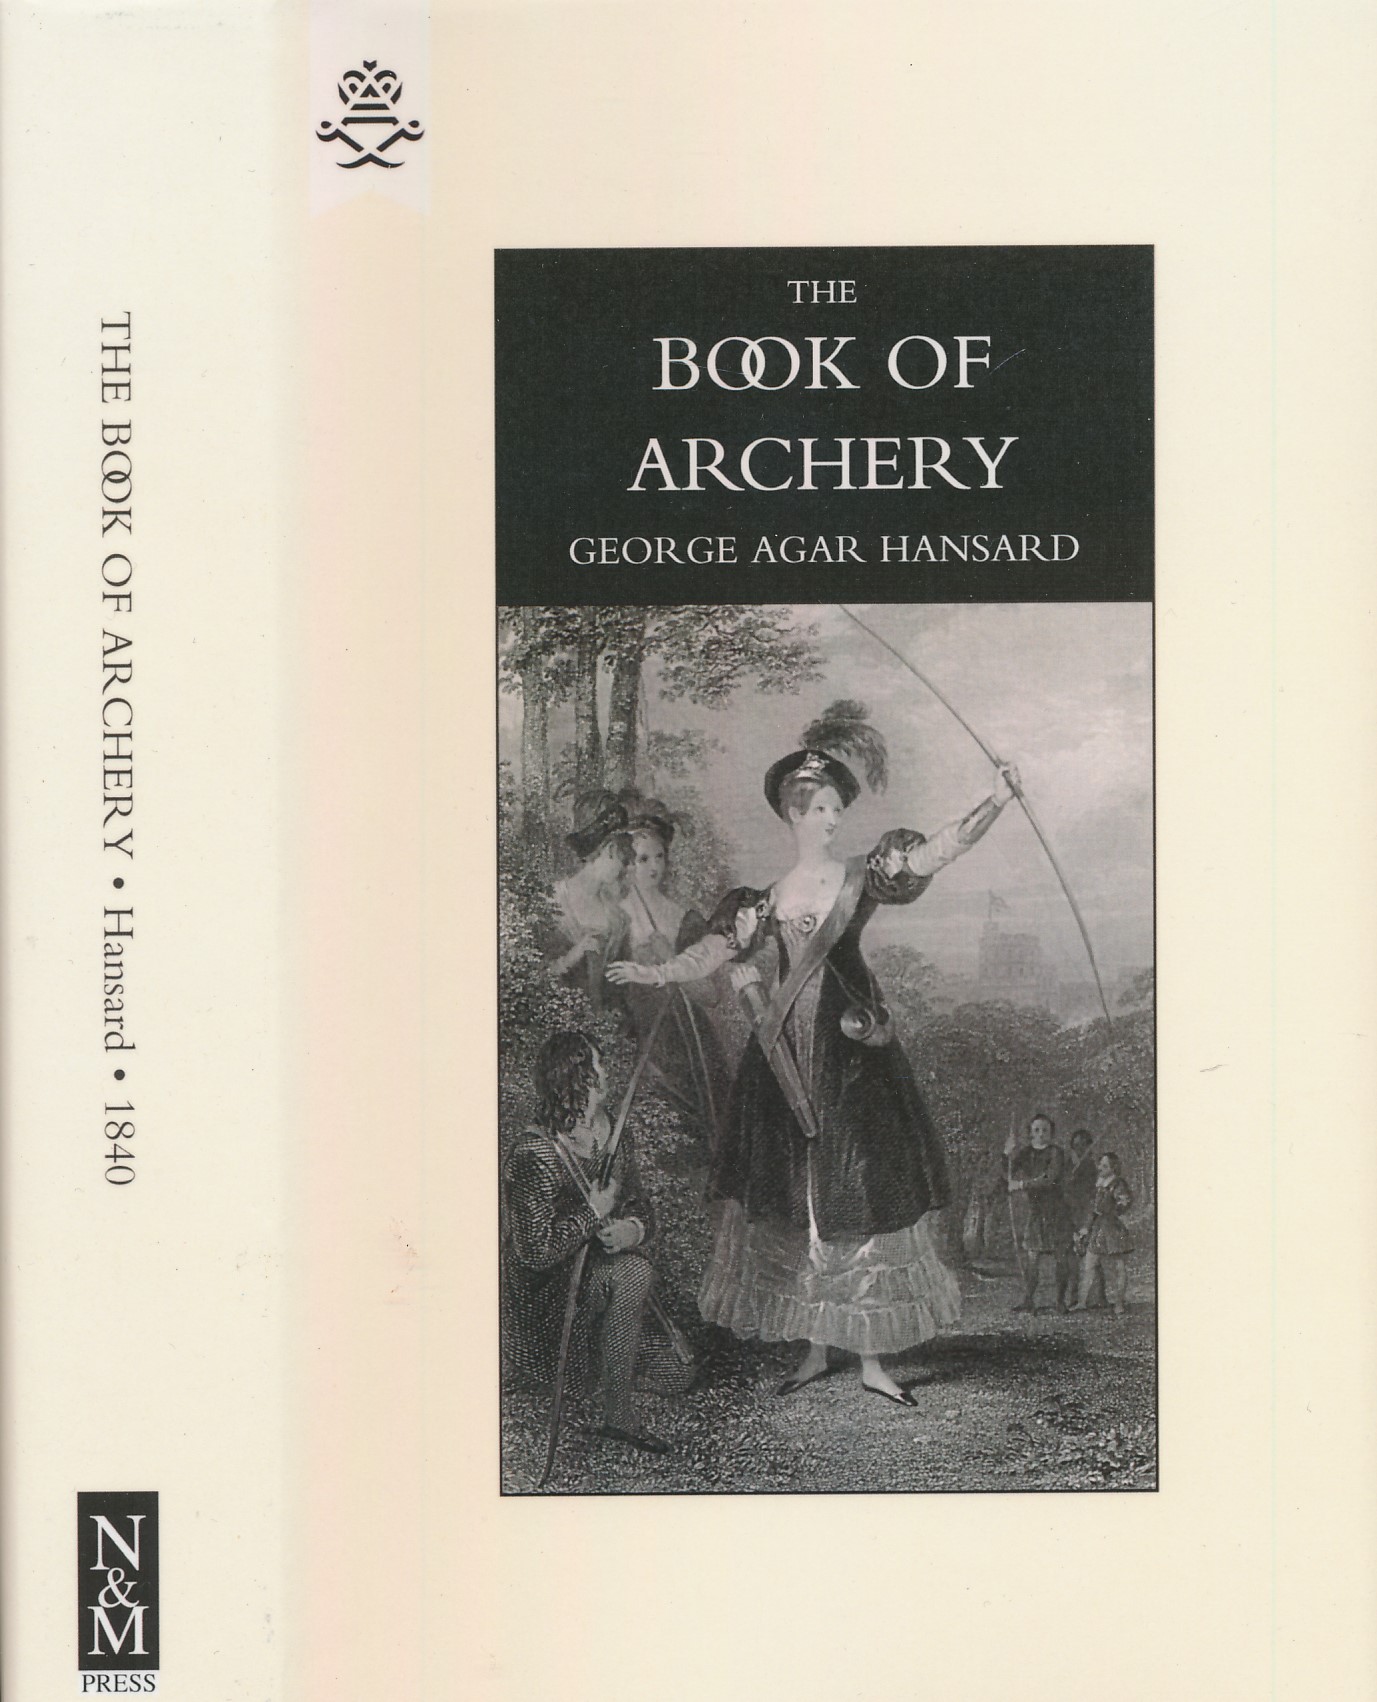 The Book of Archery. Facsimile copy.